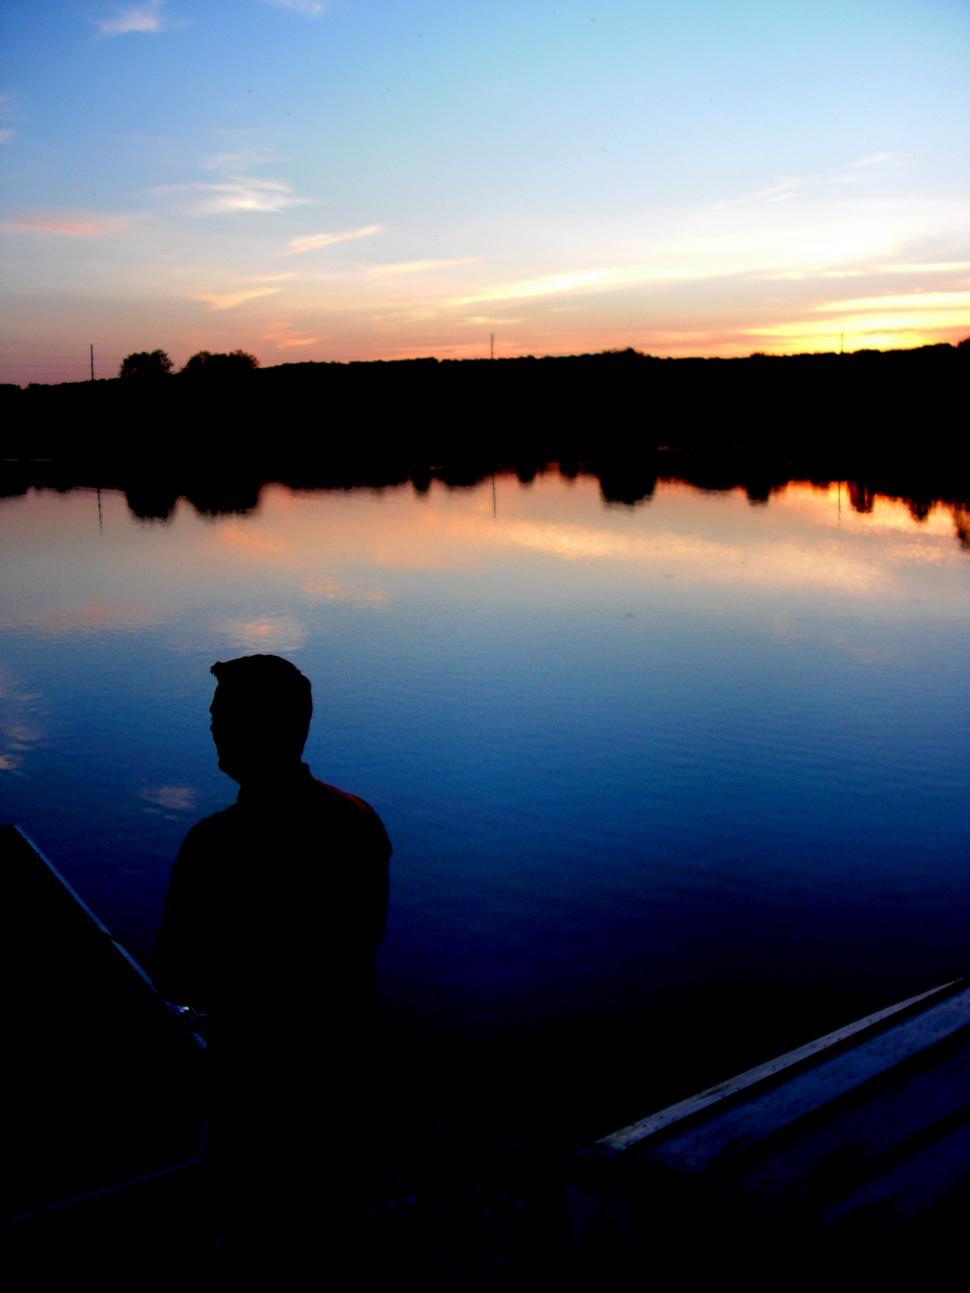 Free Image of Man Standing Next to Boat on Lake 